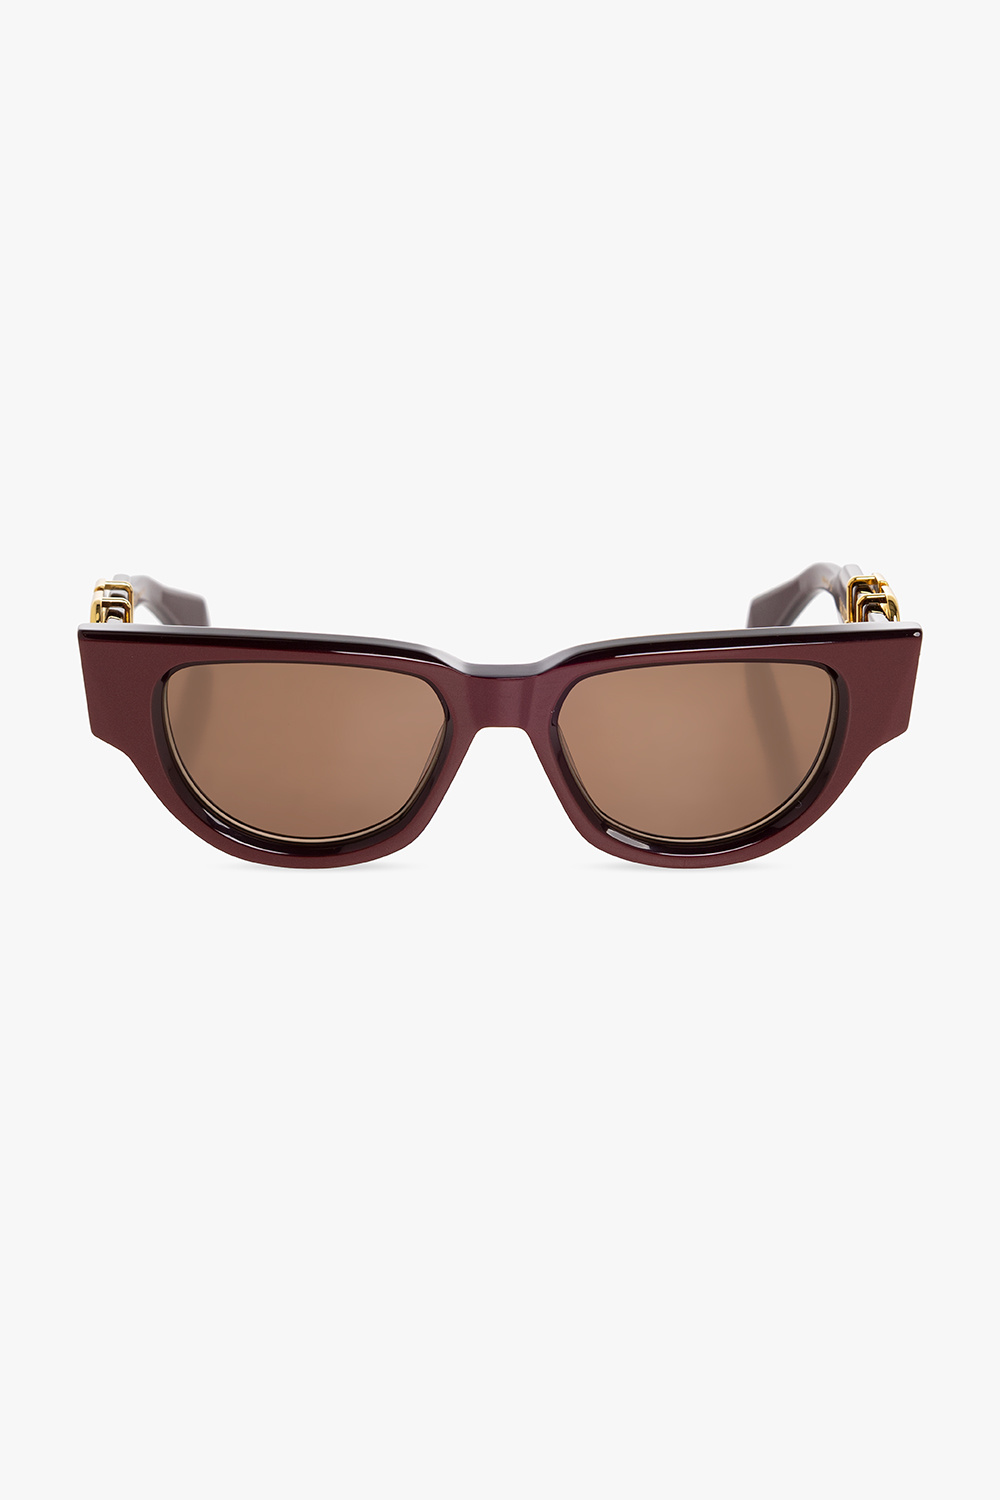 Valentino Eyewear UltraDior SU square-frame sunglasses